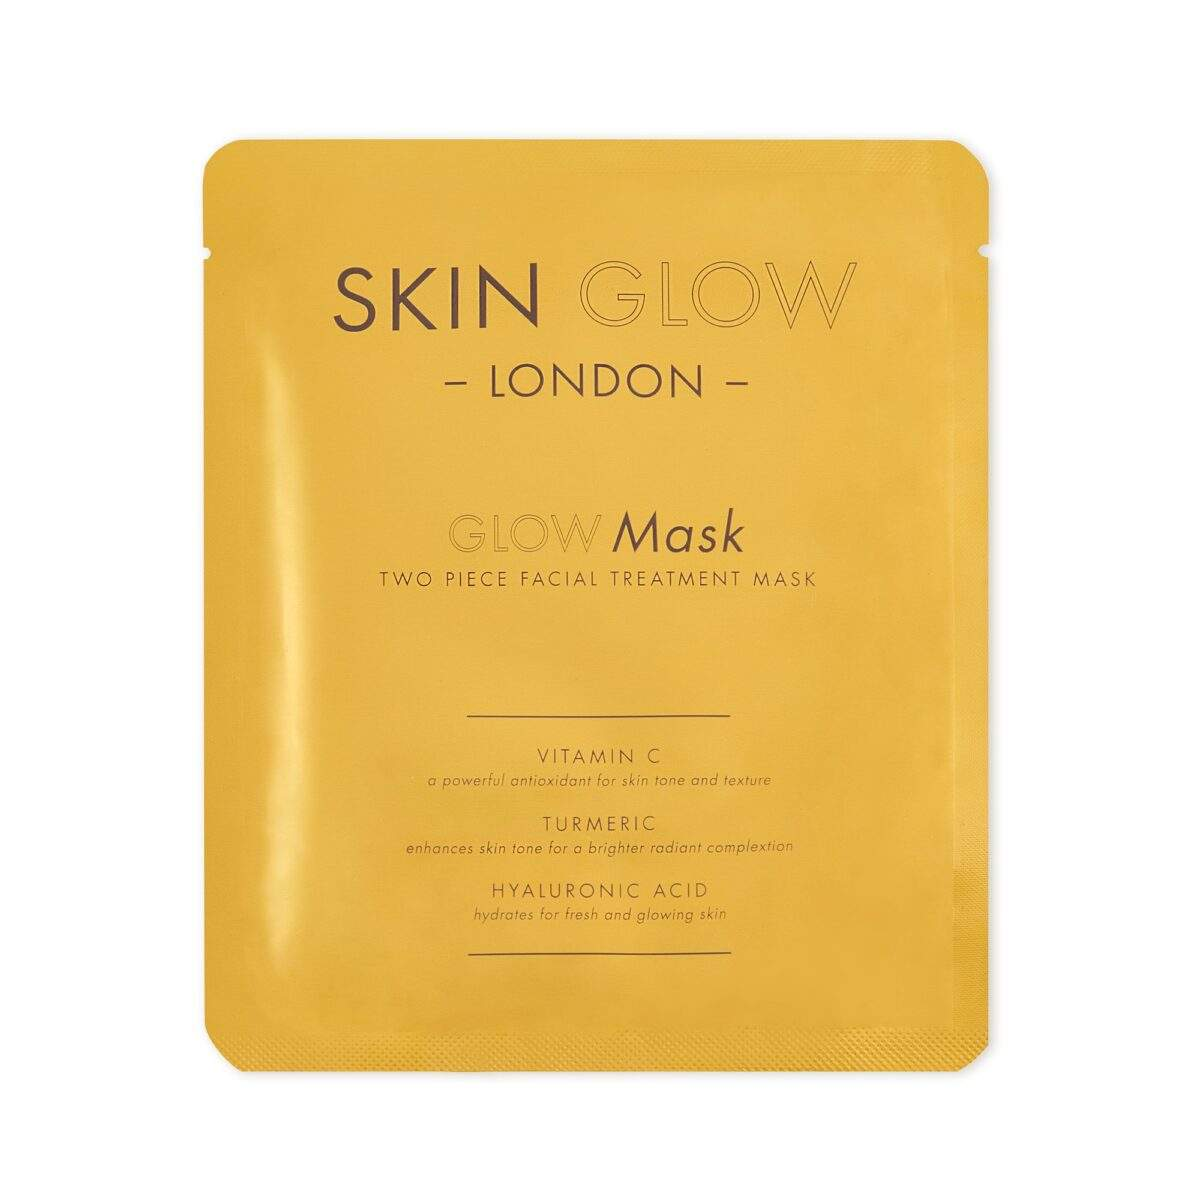 Skin Glow London Glow Mask - Two piece facial treatment mask